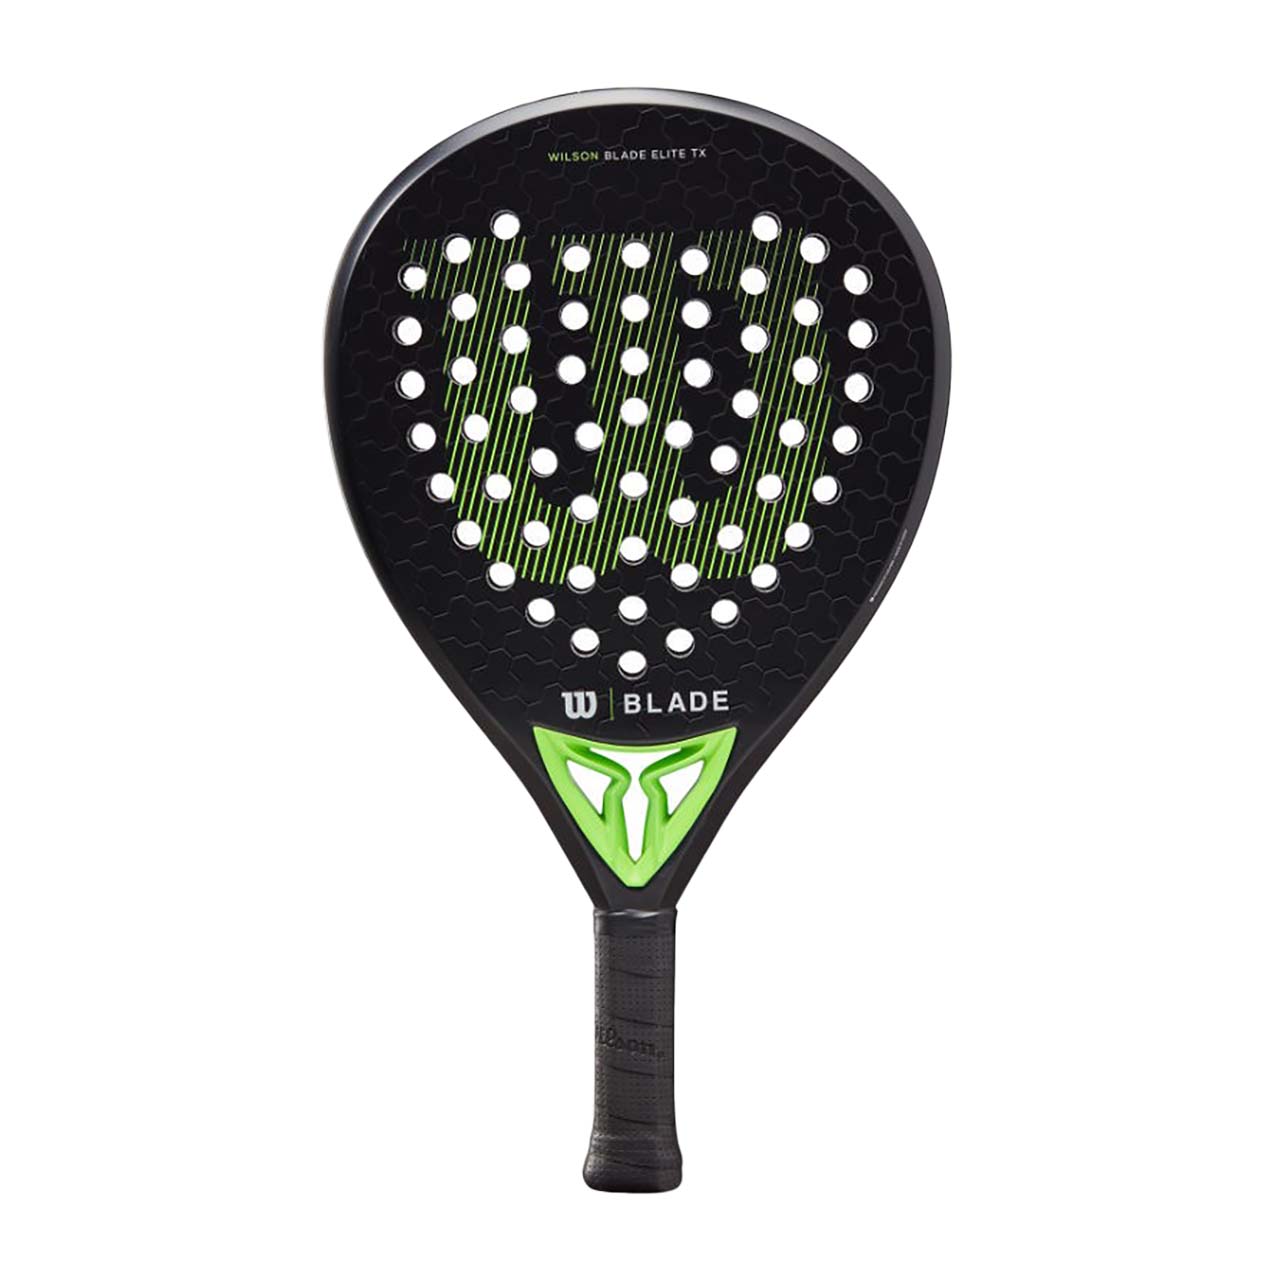 sport service italia padel racket wilson blade elite TX v2tx wr104611u - Racchette Paddle - Sport Service Italia